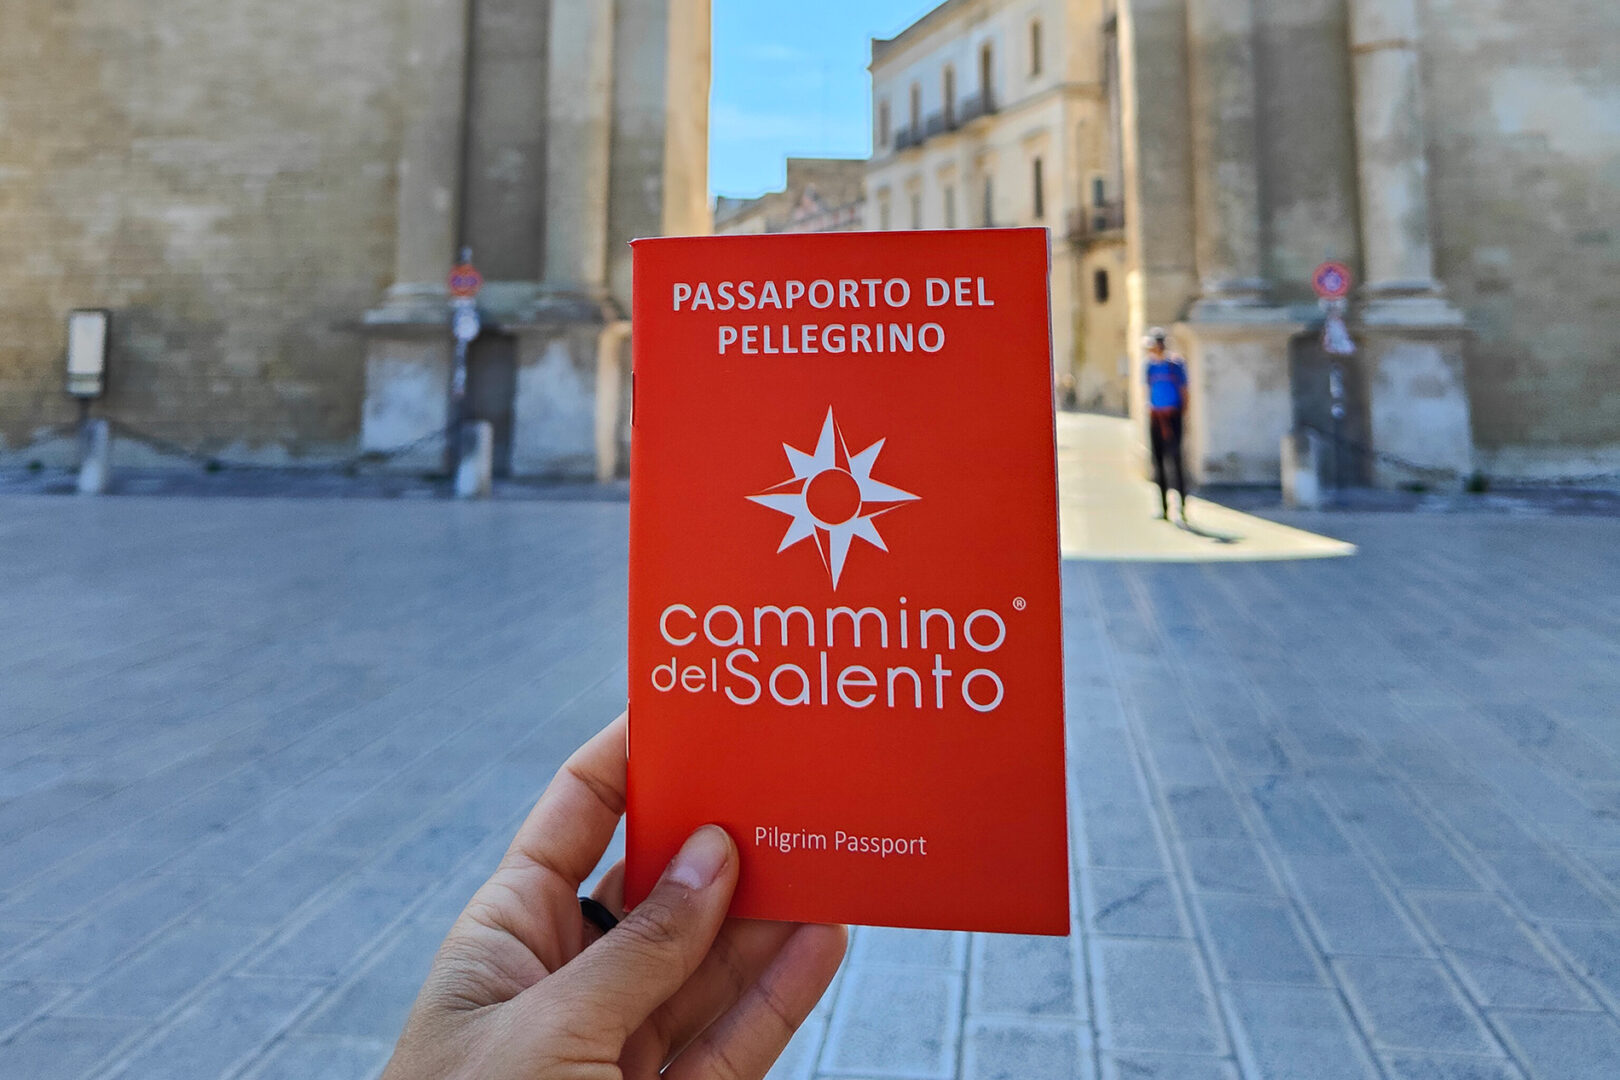 Pilgrim pasport of the Cammino del Salento